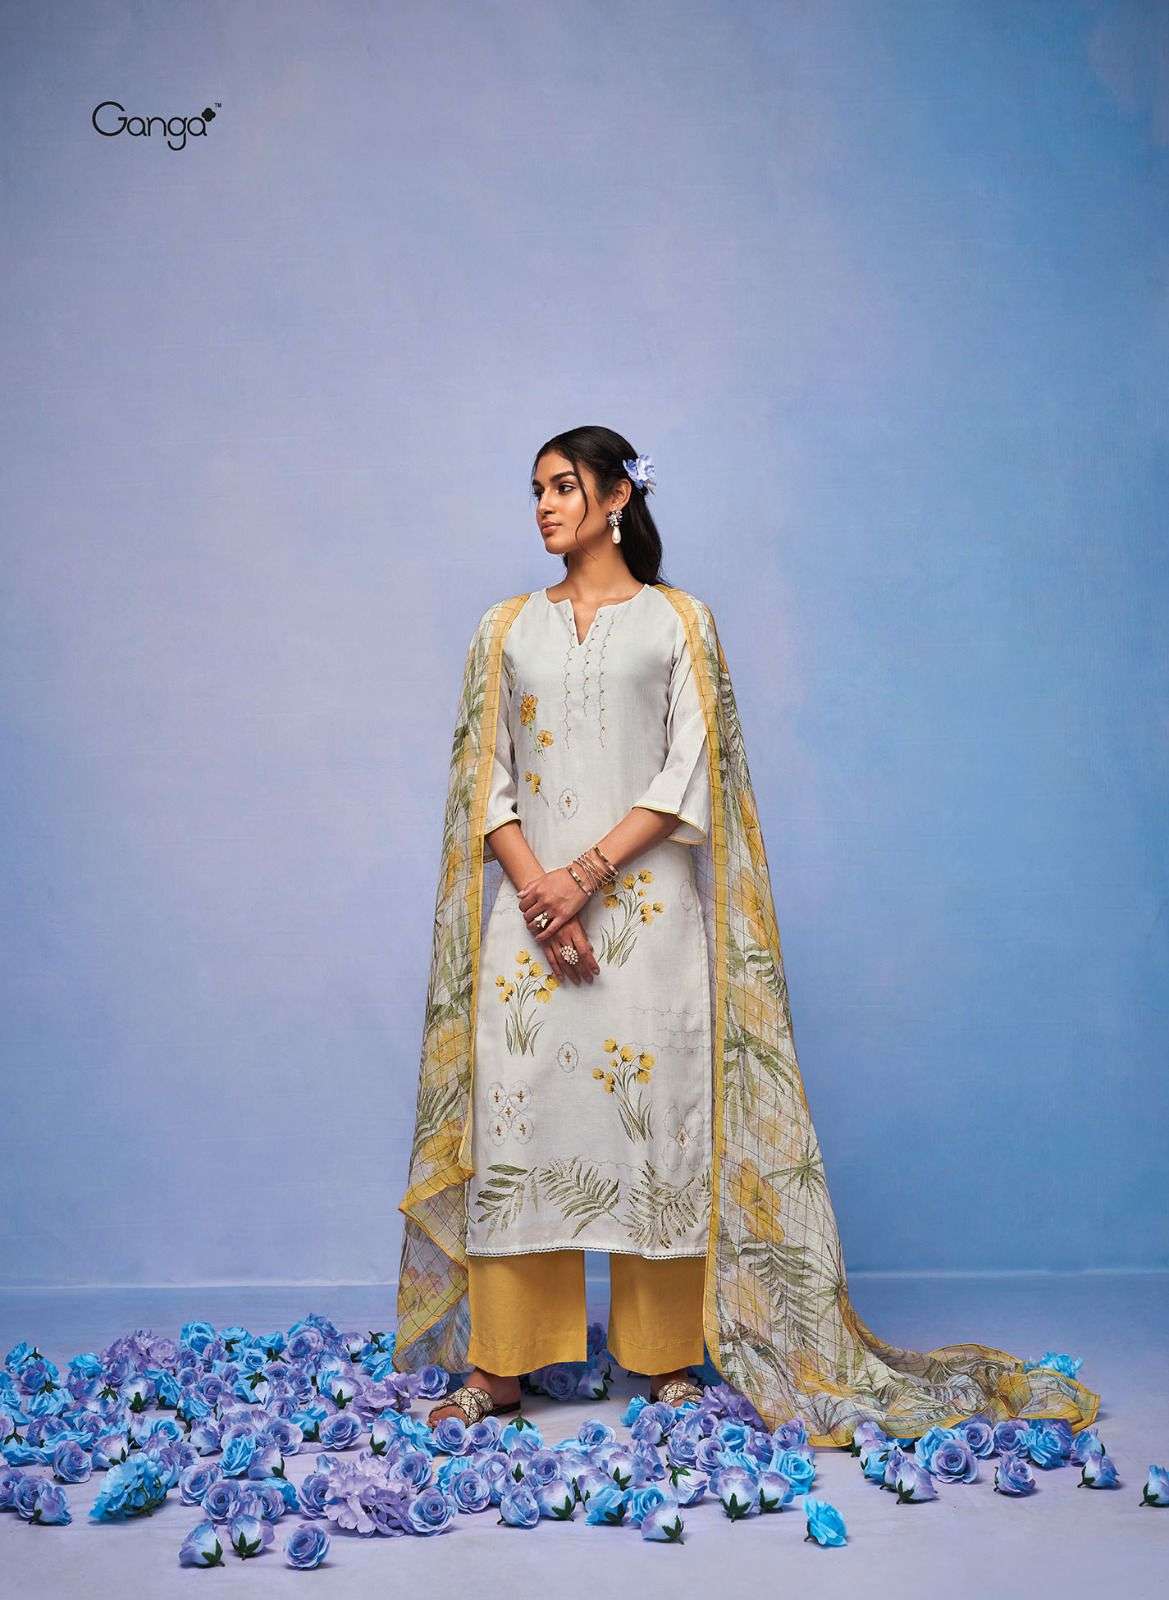  ganga gulmohar 1426-14231 series premium cotton designer salwar suits catalogue design 2023